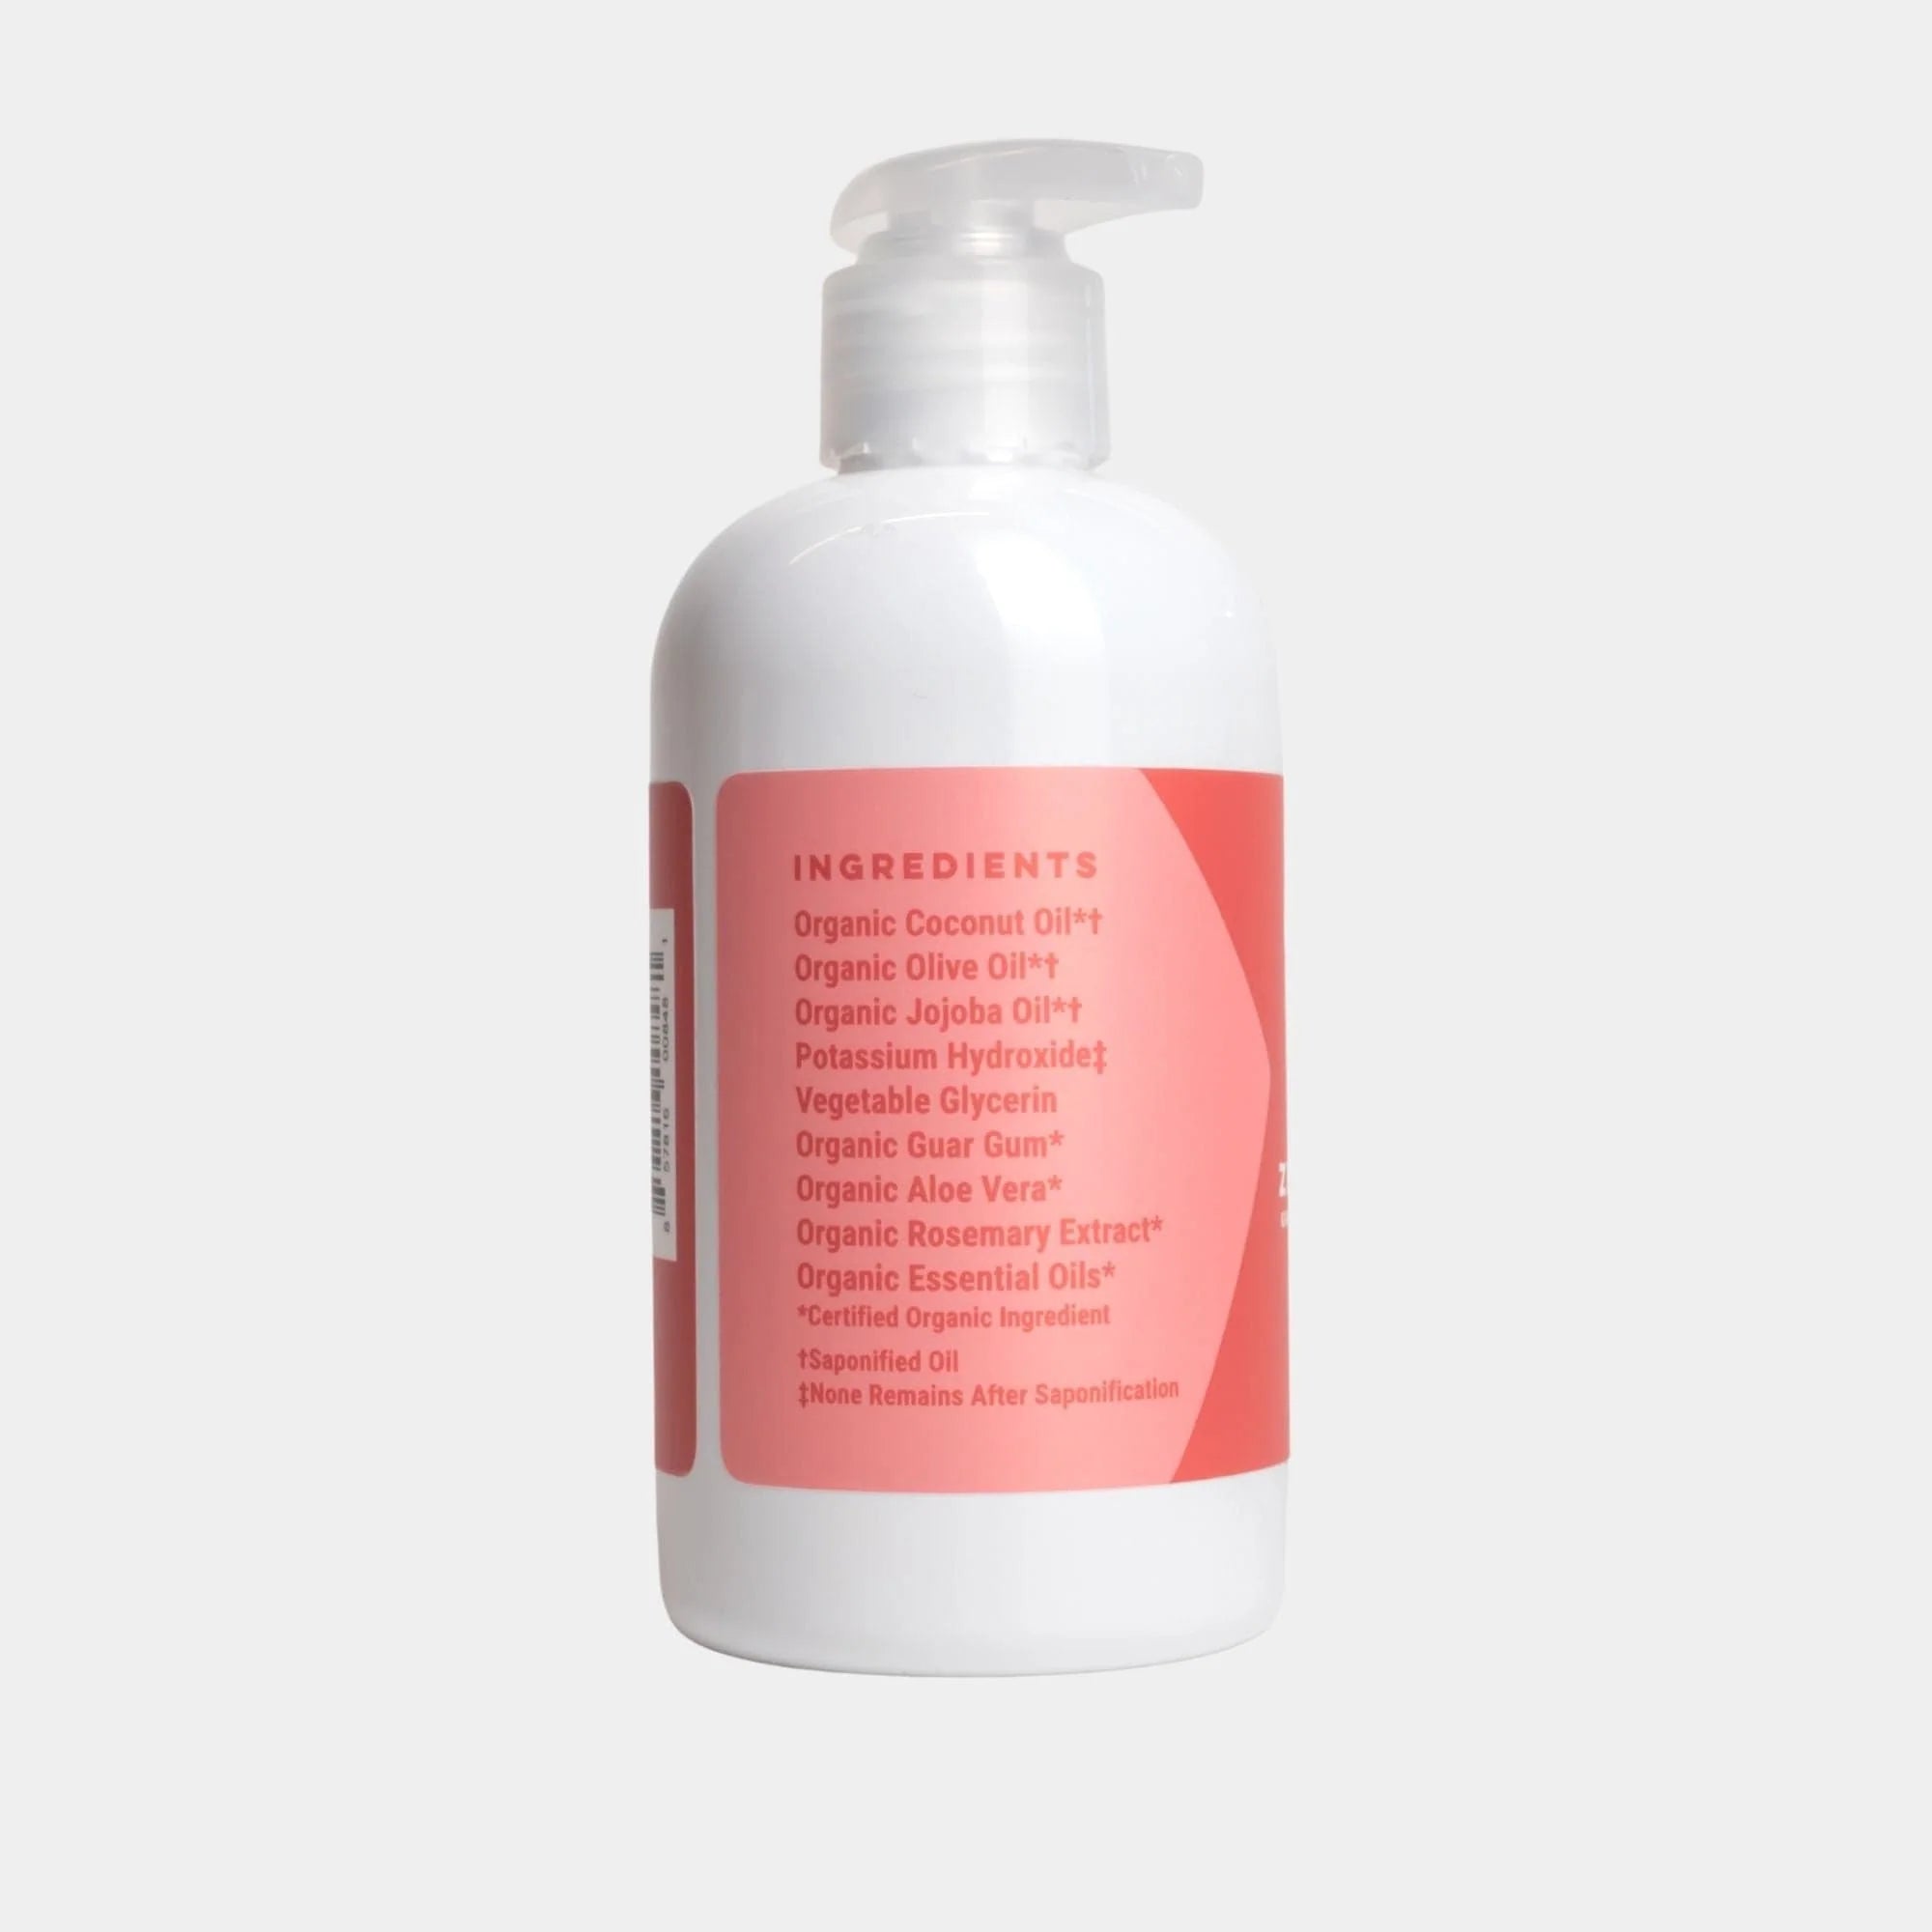 Organic Bath Co. | Zesty Morning Hand Soap